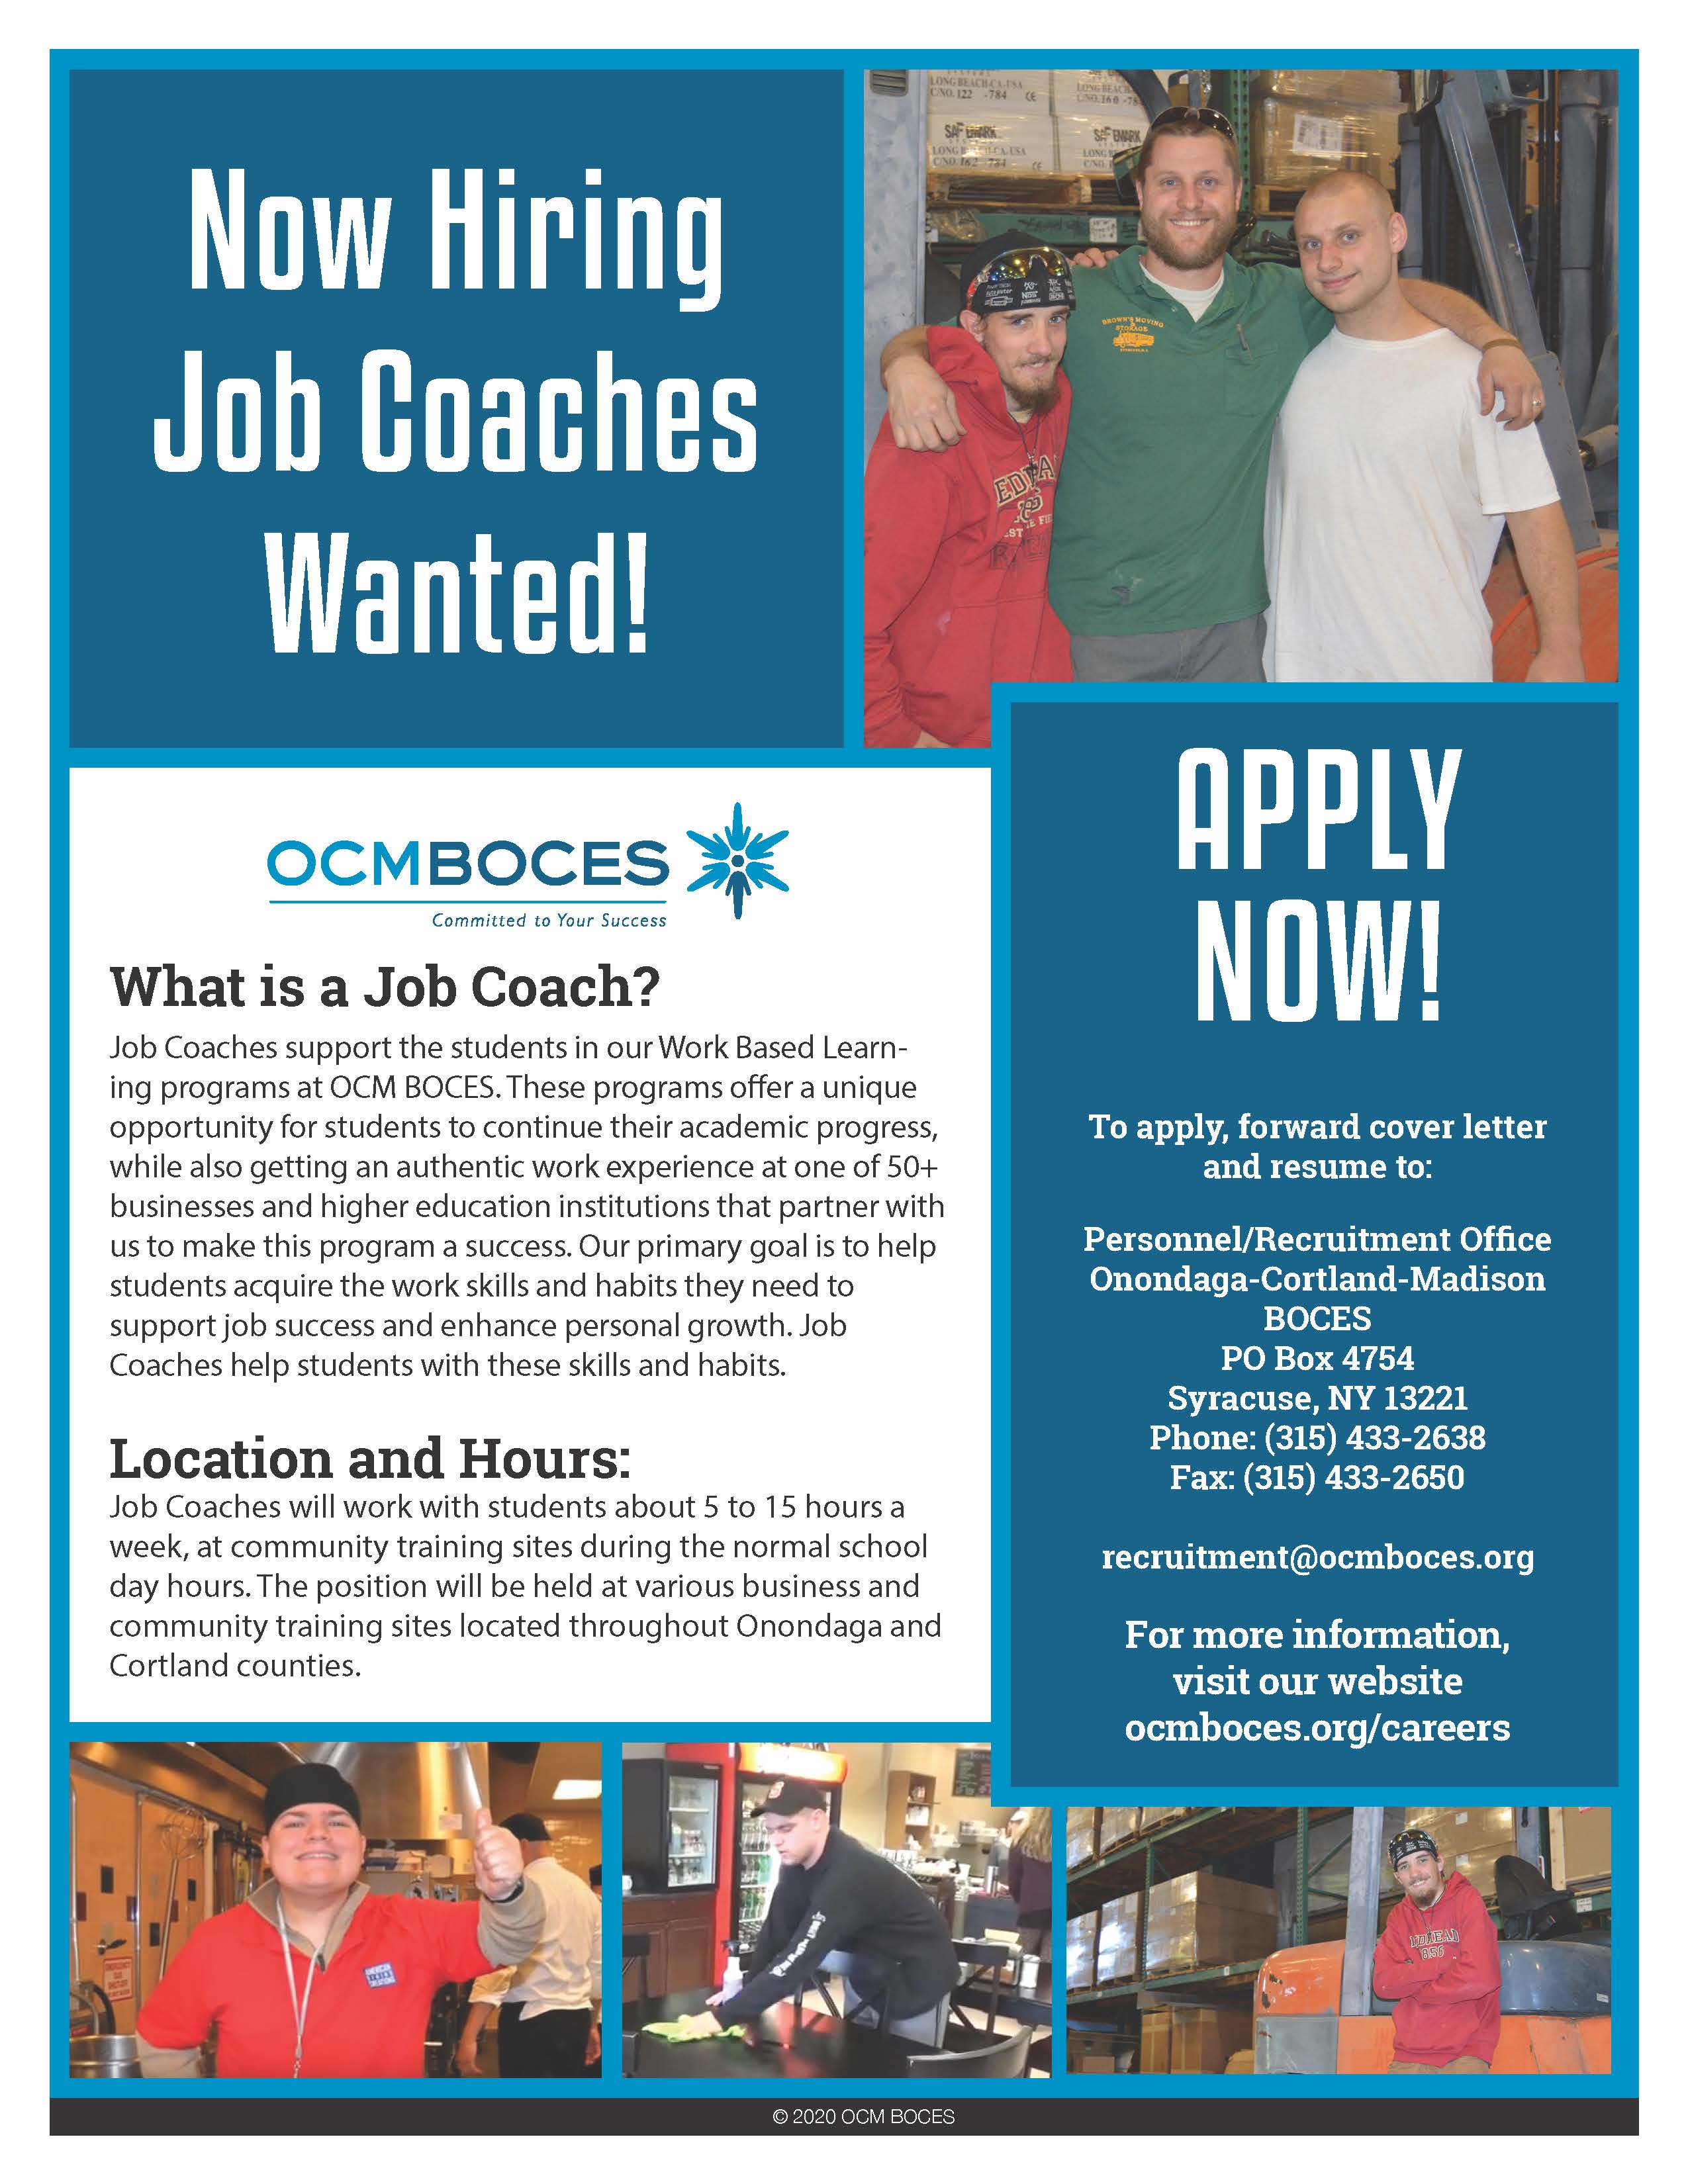 Now Hiring - Job Coaches